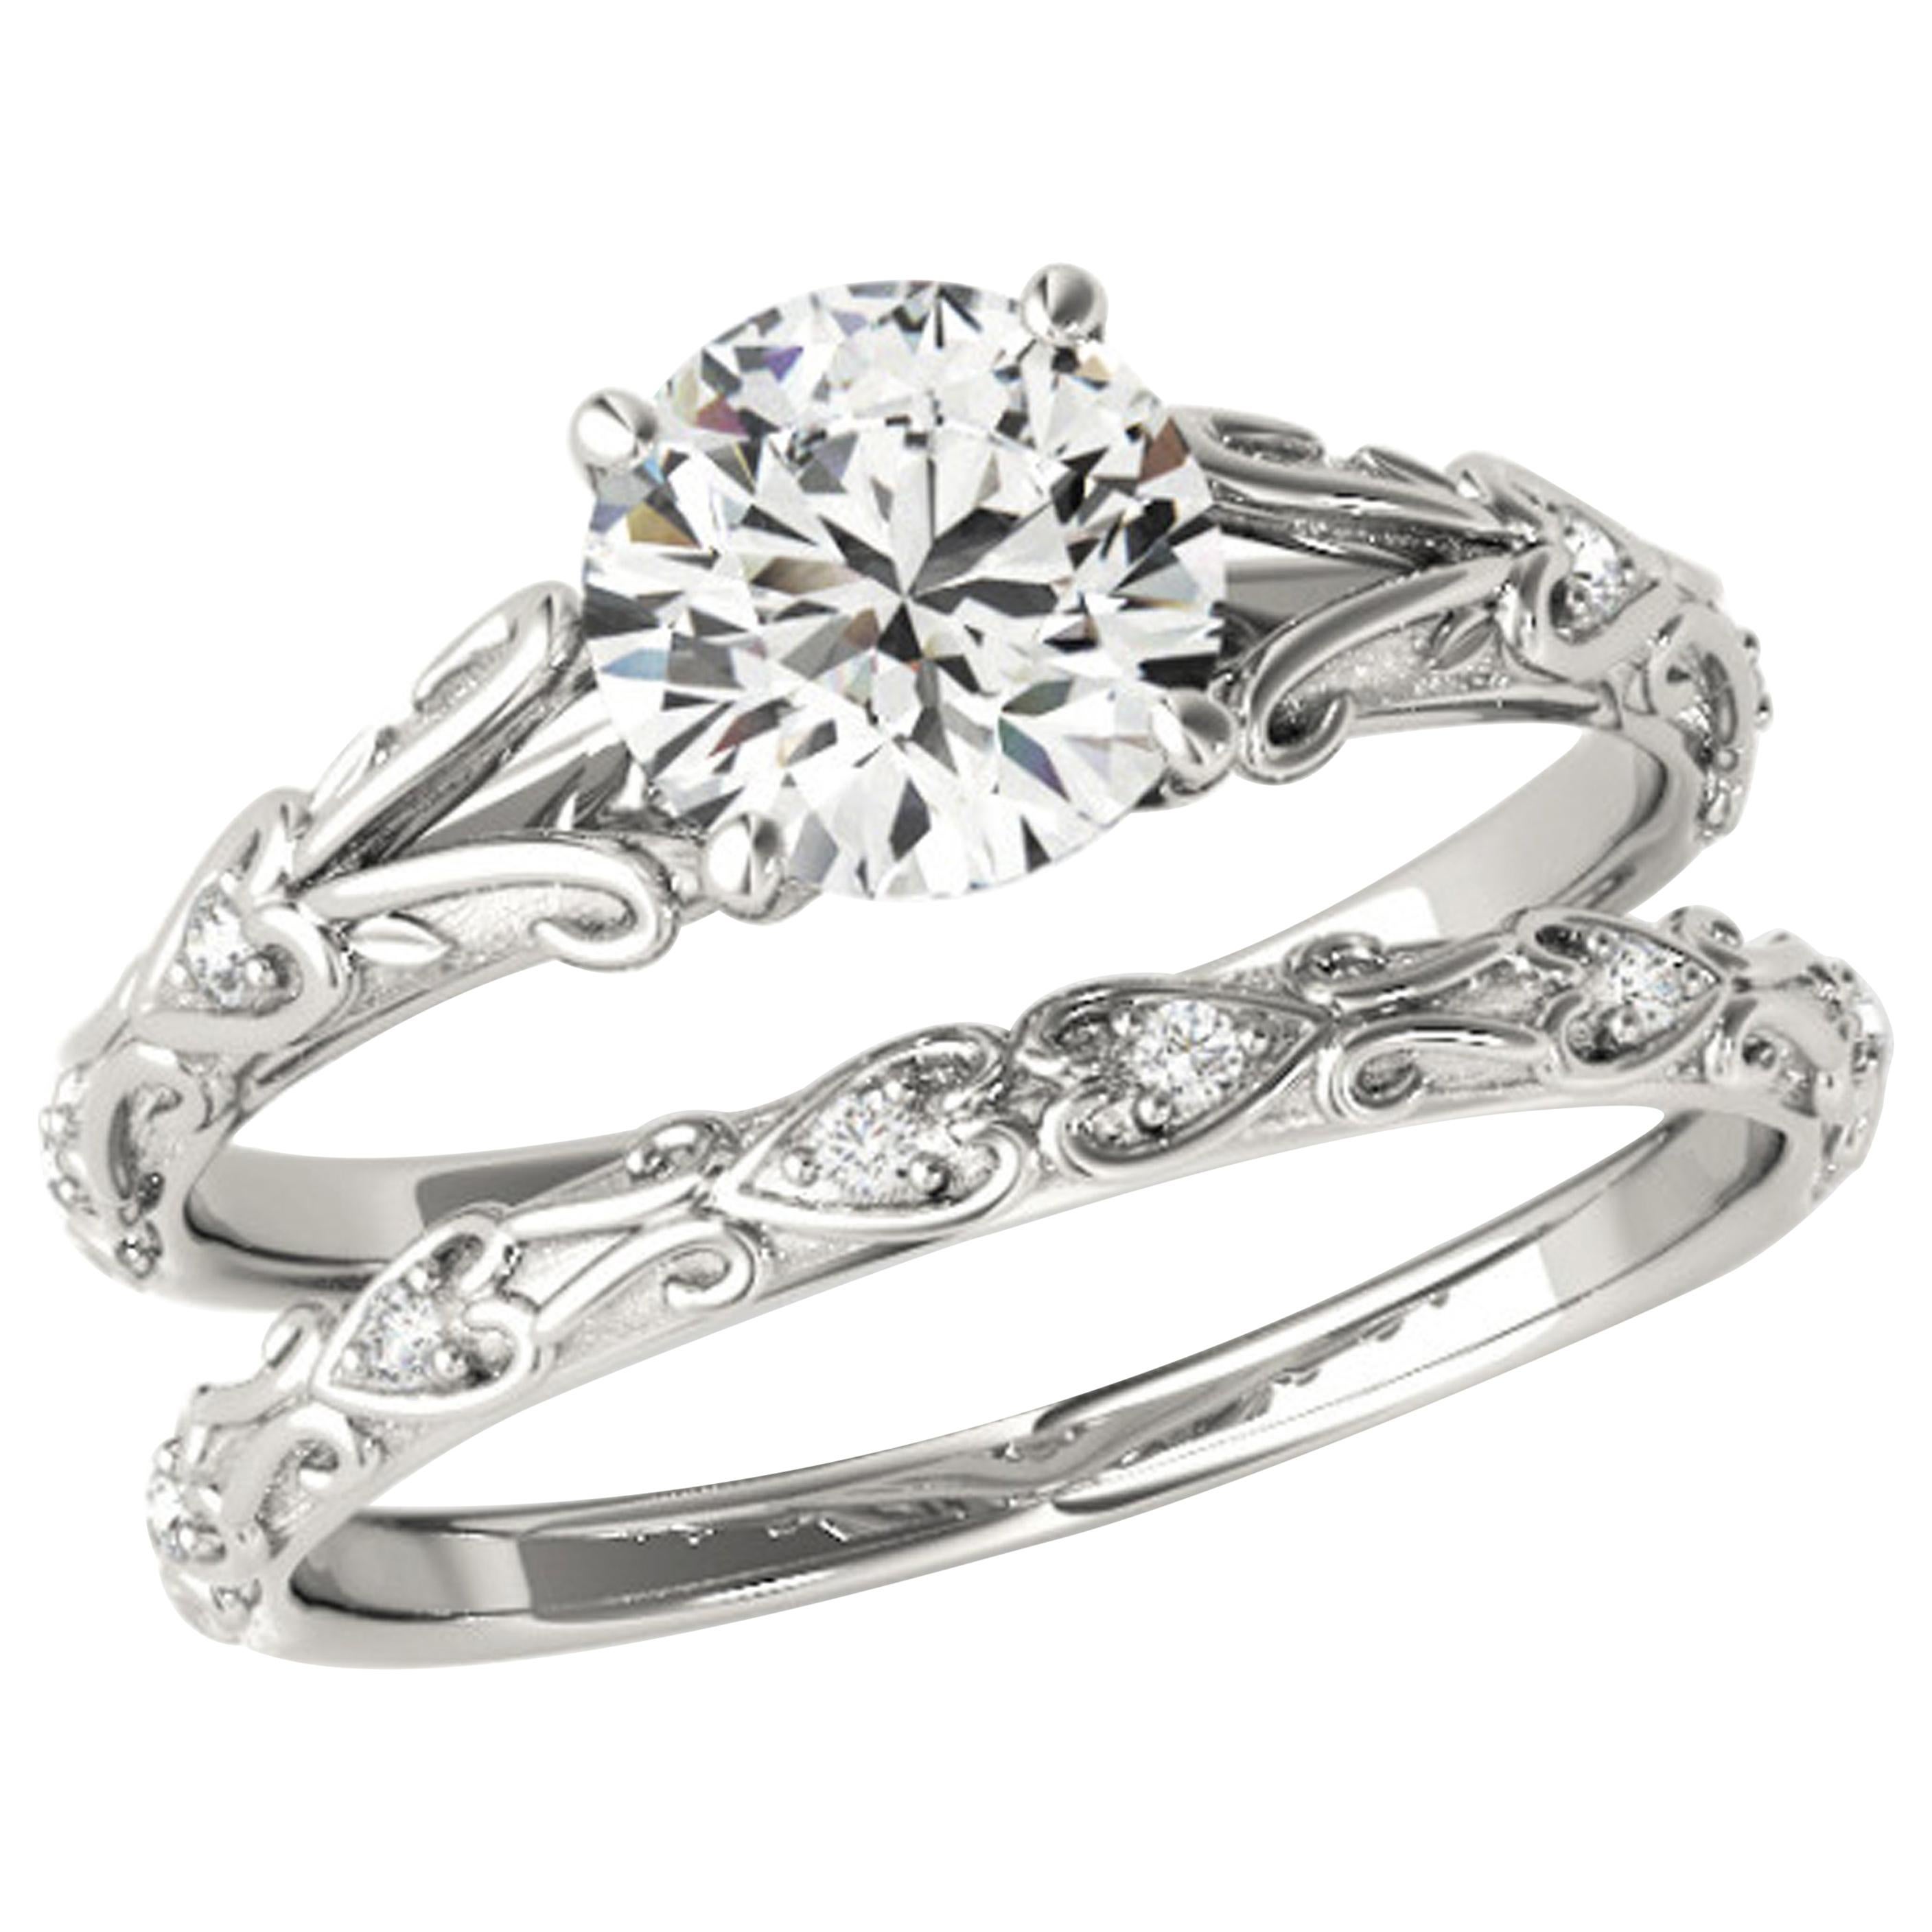 Vintage Style Forever Moissanite And Diamond Engagement Ring Set 18k White Gold For Sale